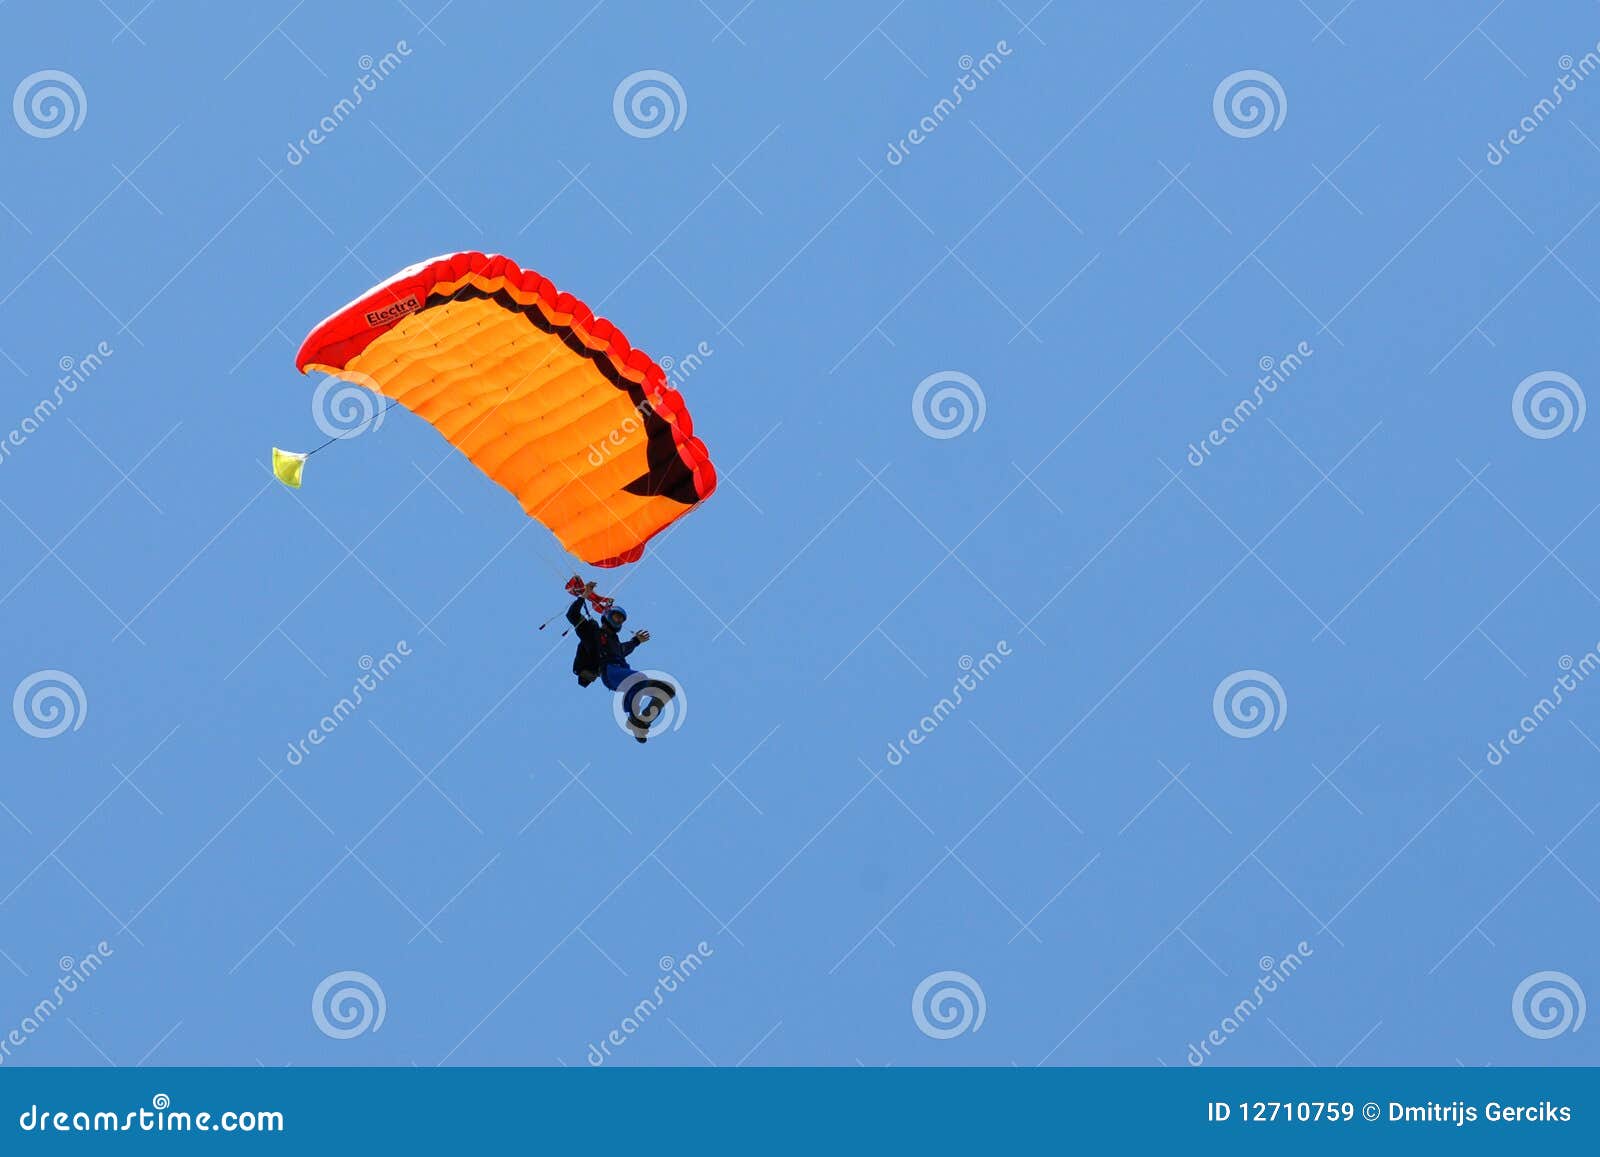 extreem sports. parachuting